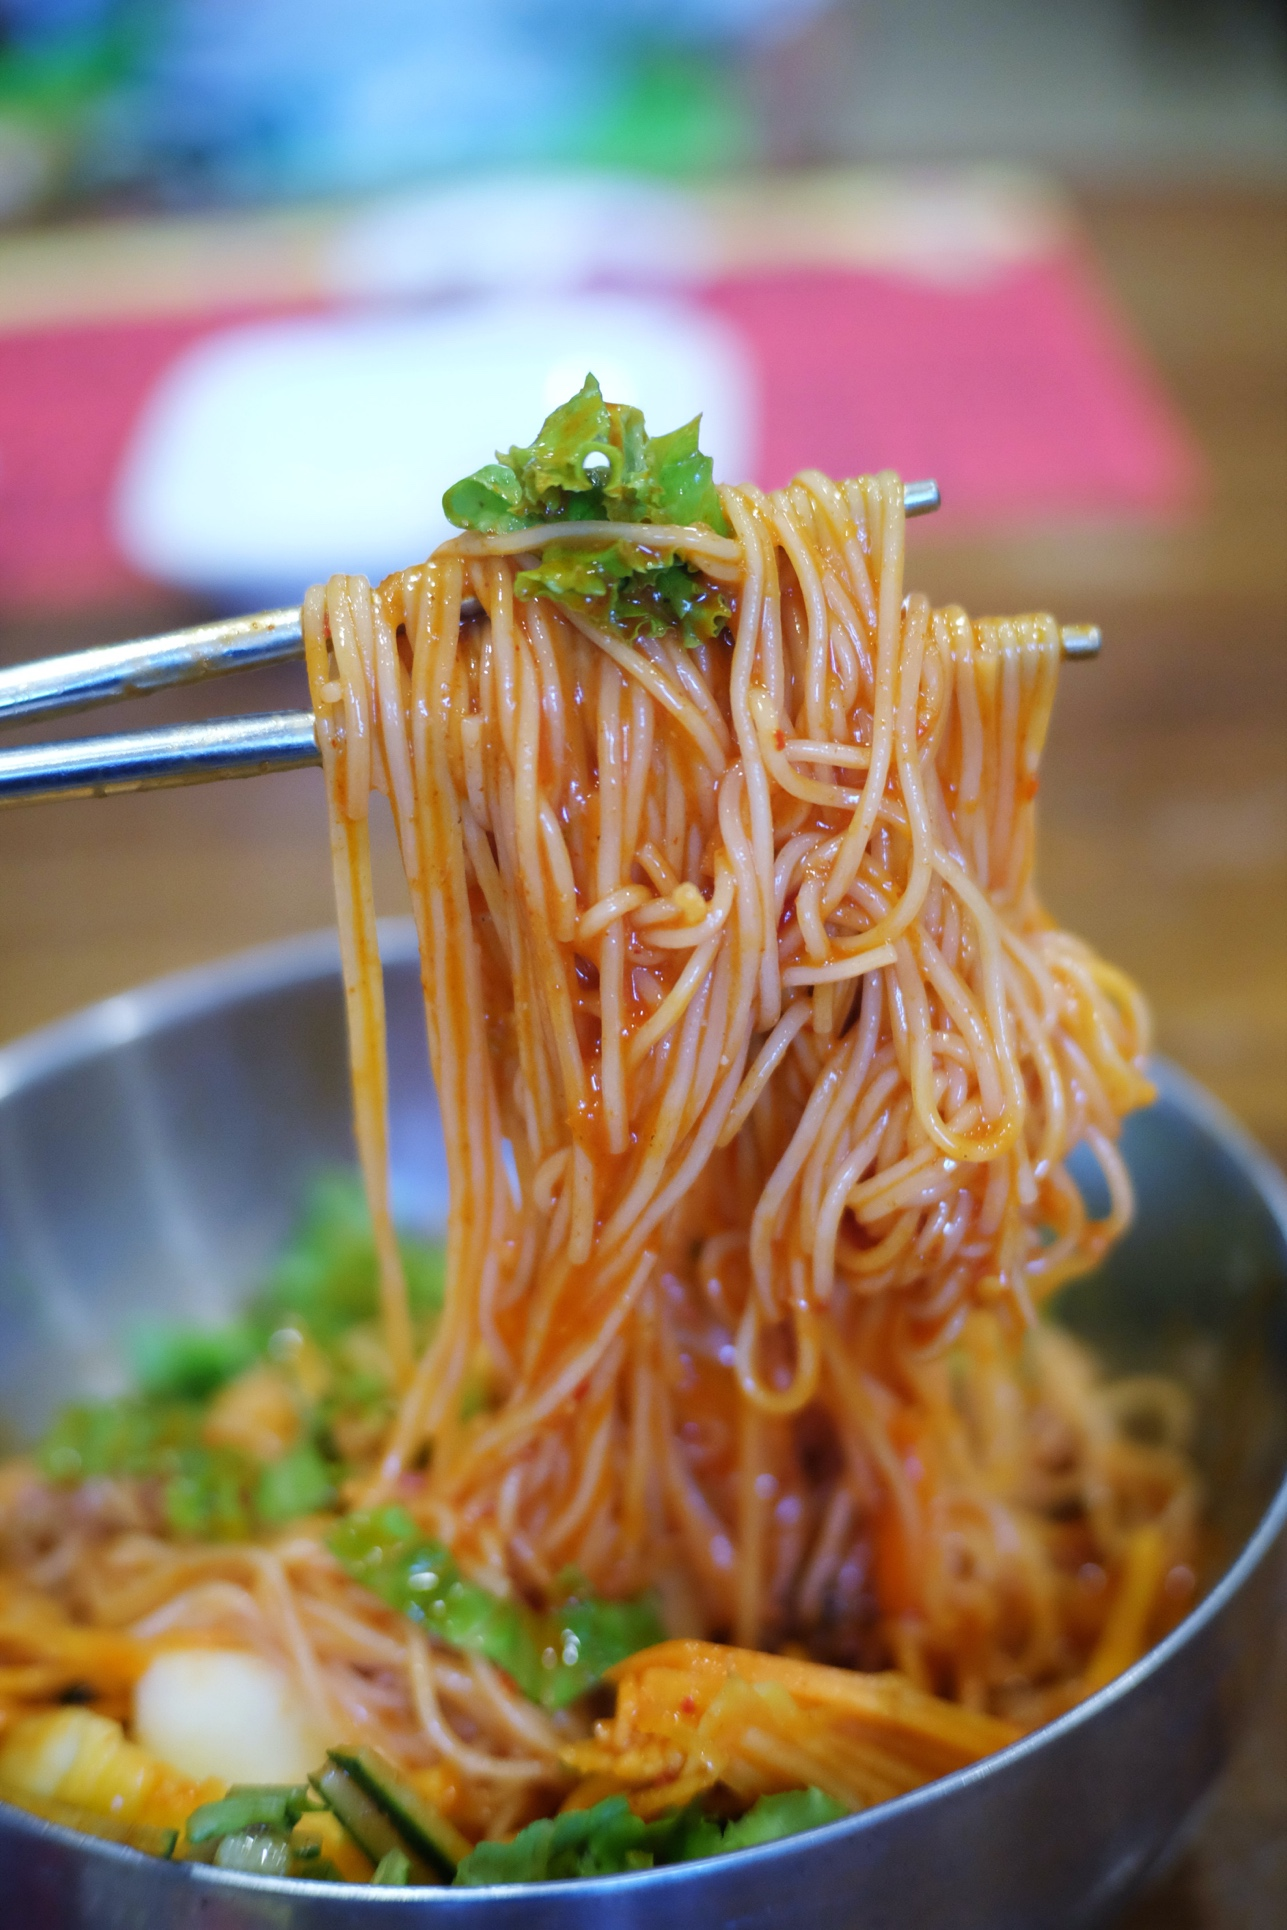 Korean noodles